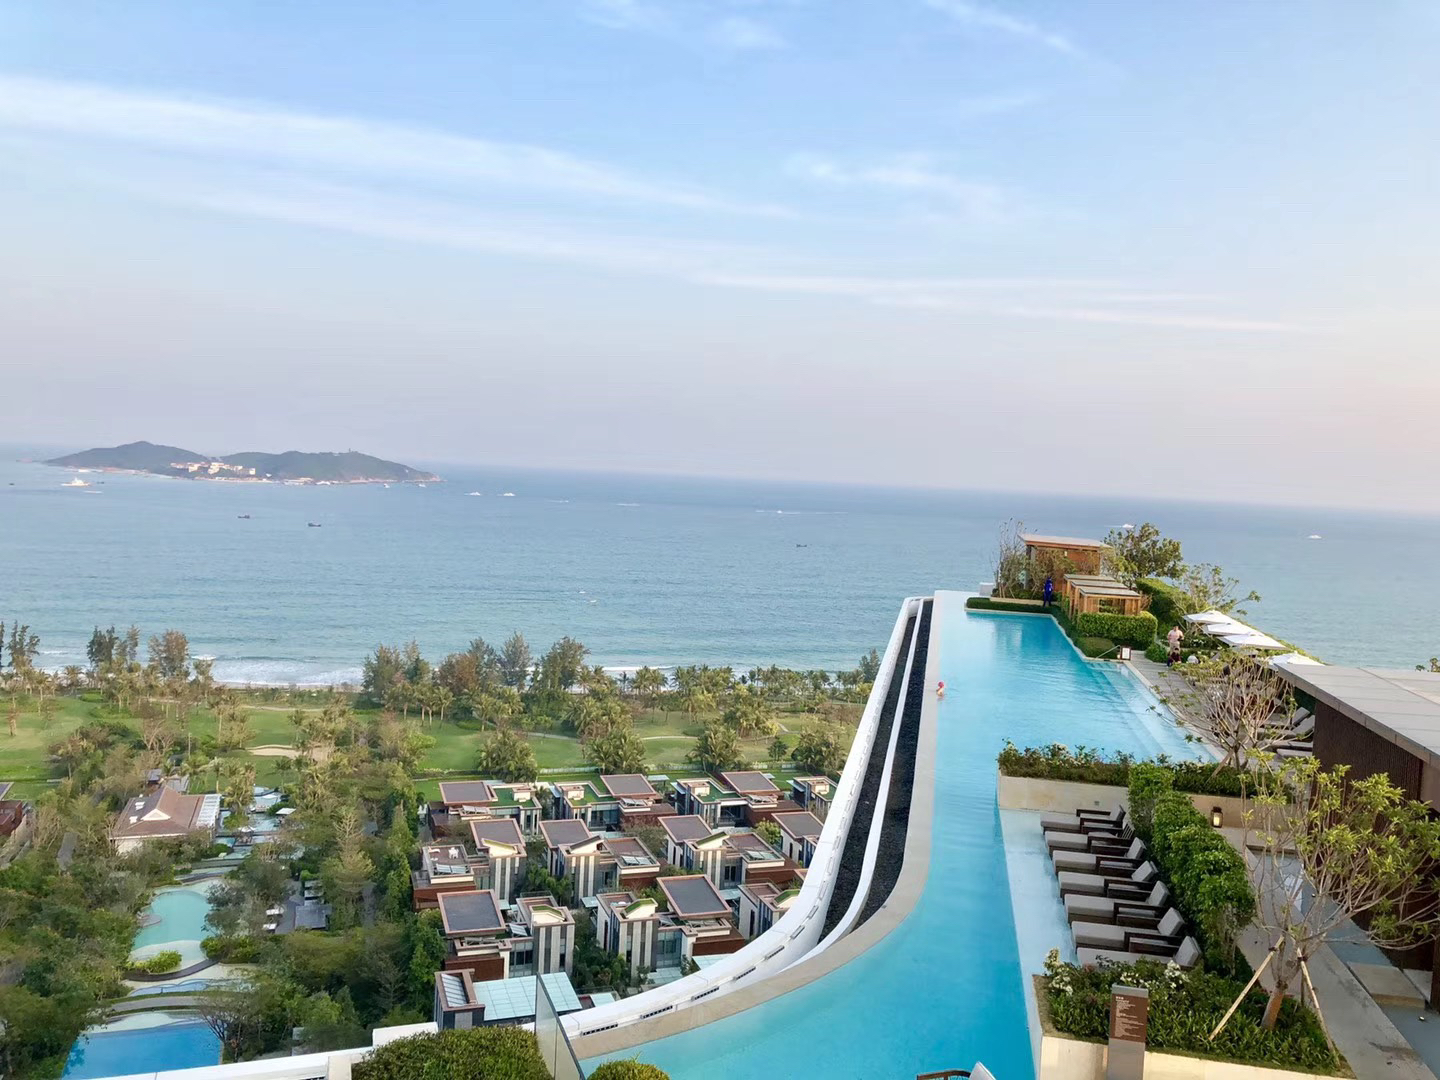 Hainan Resort Hotel สระว่ายน้ำ, HD ภาพถ่ายสระน้ำ, ว่ายน้ำ, ไห่หนาน ดาวน์โหลดฟรี - Lovepik